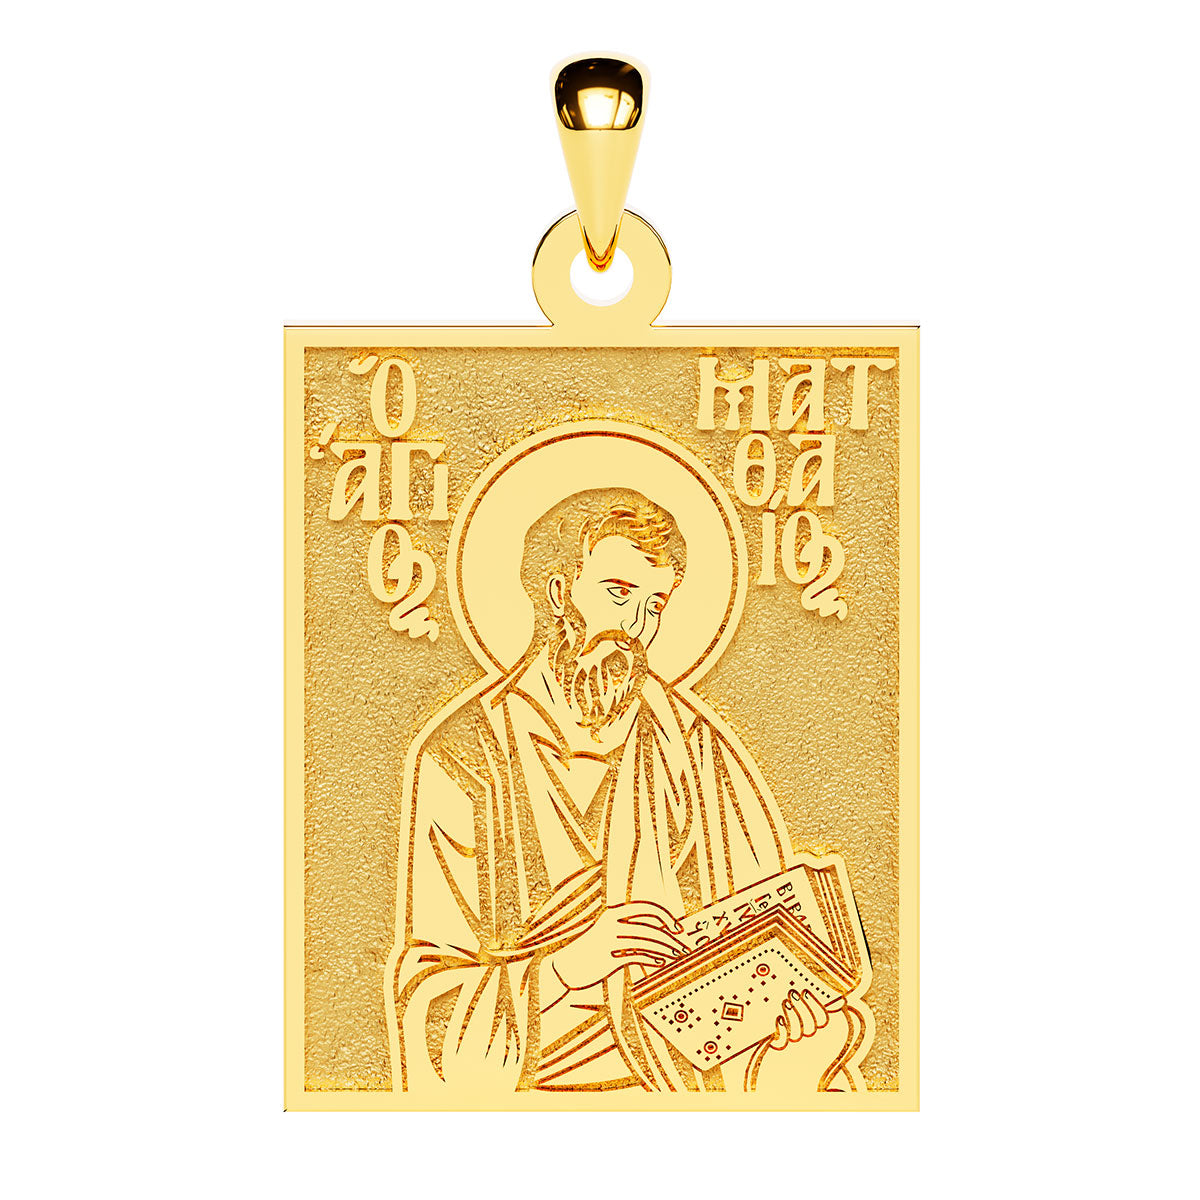 Saint Matthew the Apostle Evangelist Greek Orthodox Icon Tag Medal